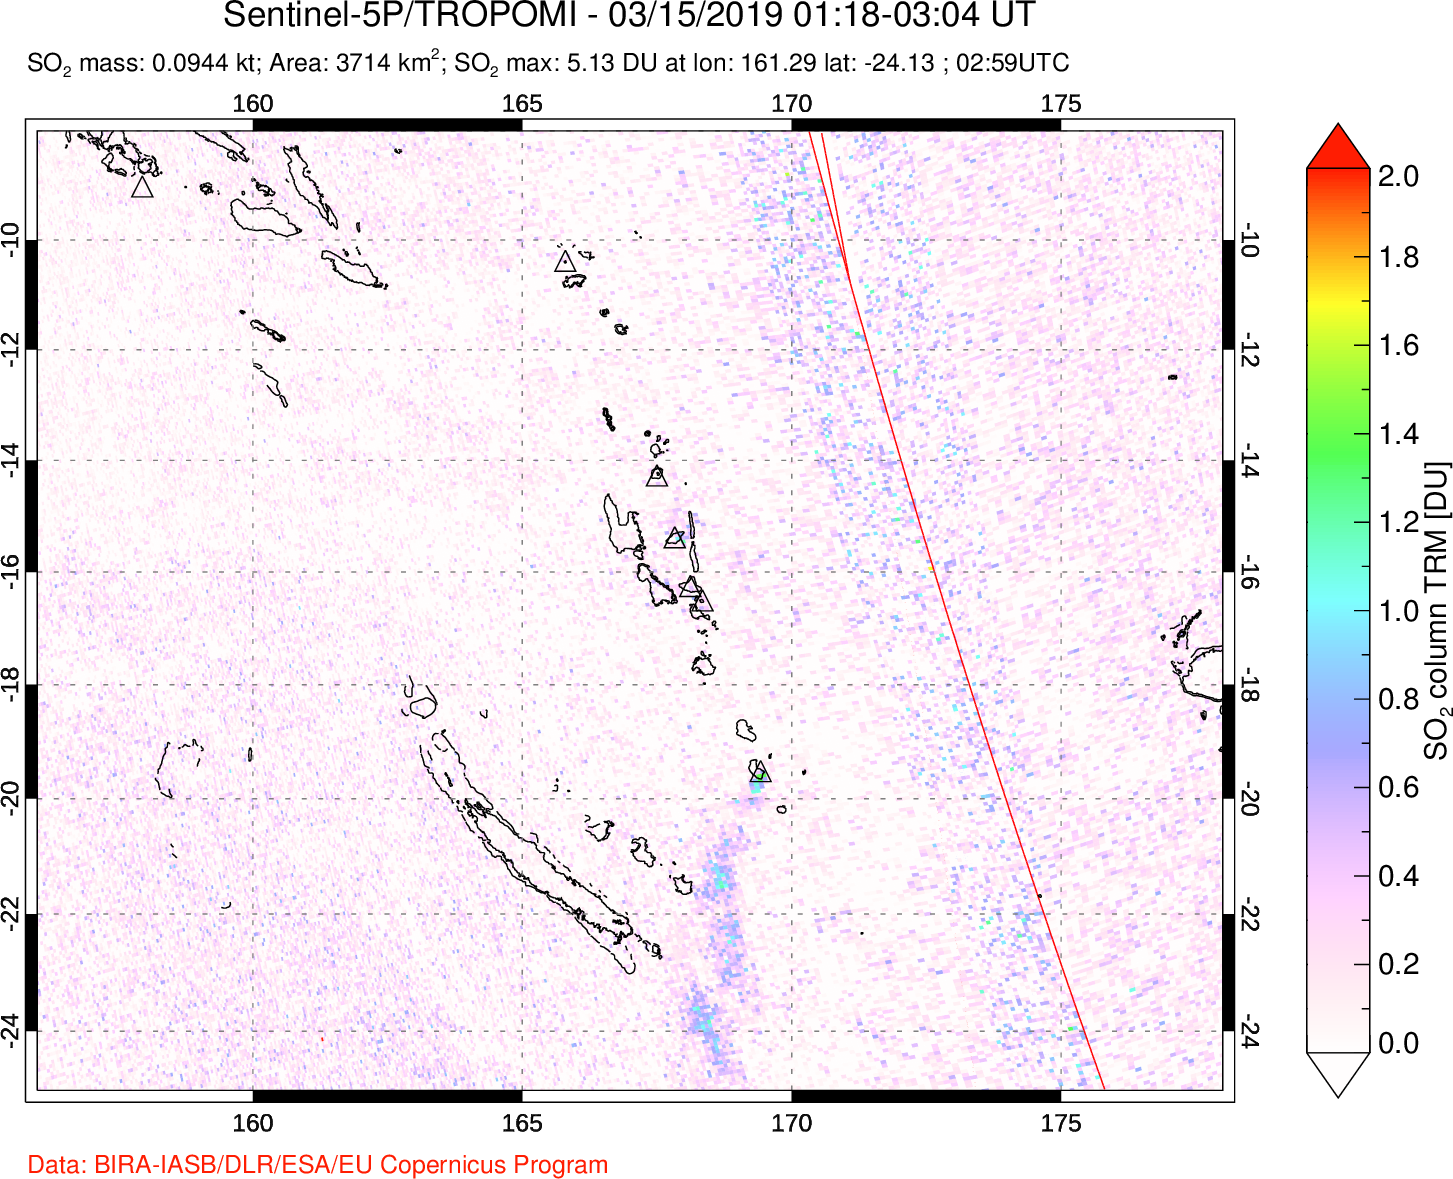 A sulfur dioxide image over Vanuatu, South Pacific on Mar 15, 2019.